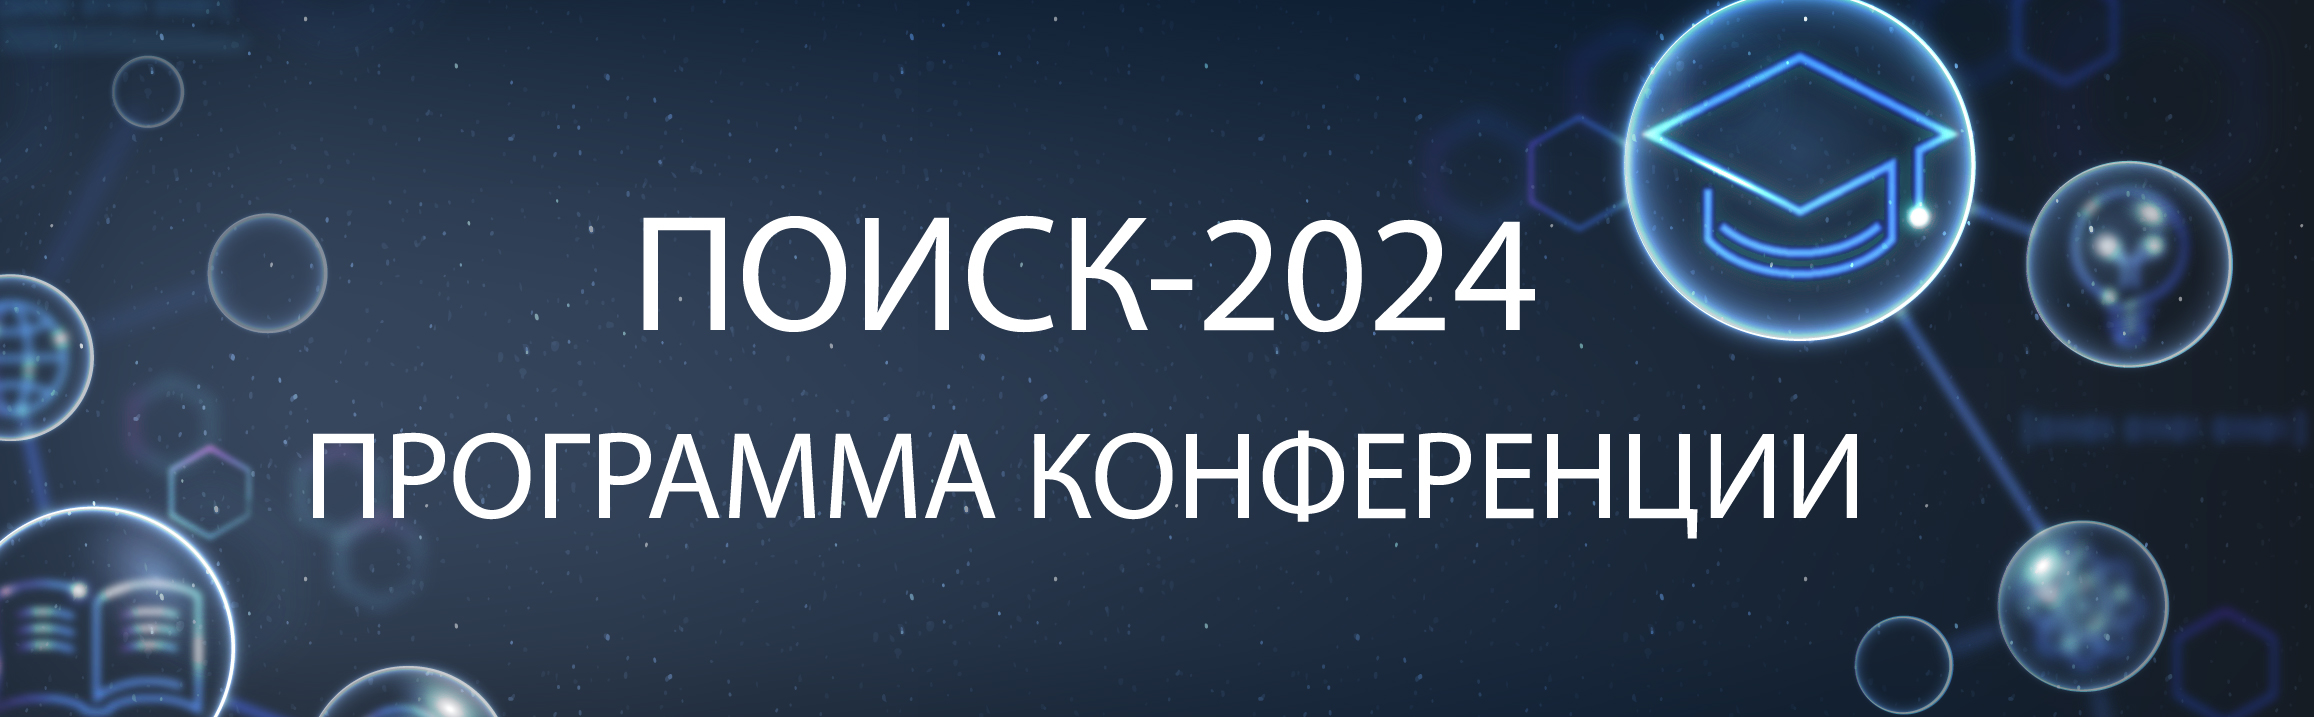 Программа Поиск-2024